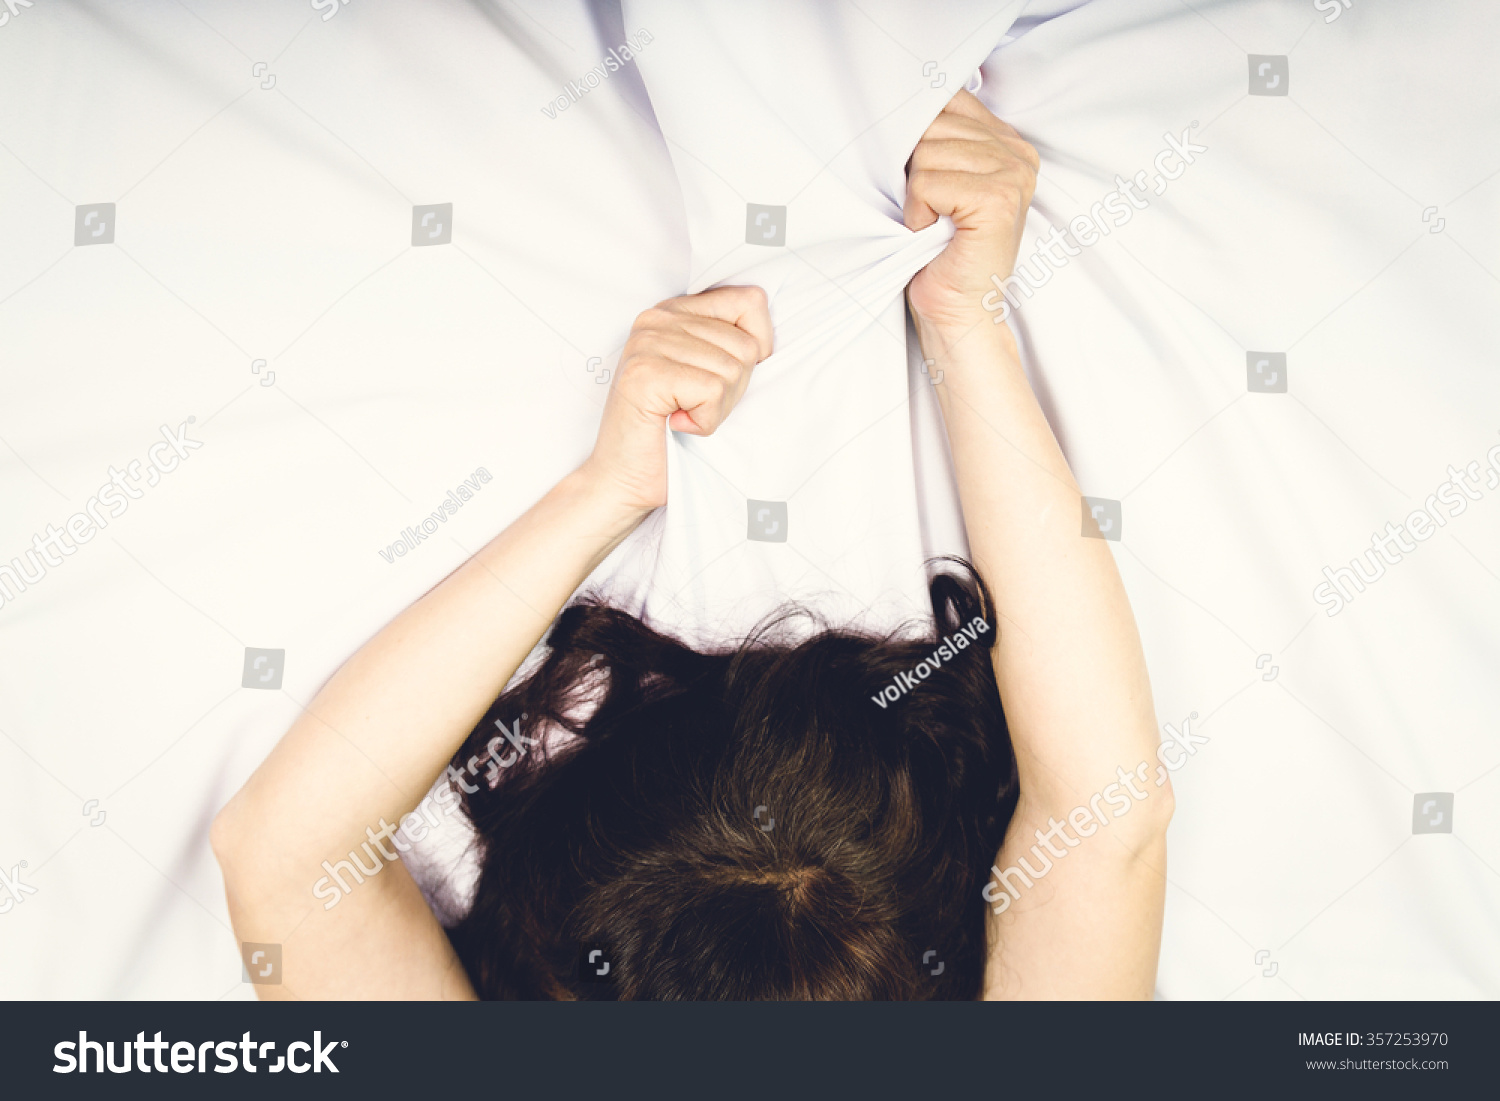 Female Hand Pulling White Sheets Ecstasy Stock Photo 357253970